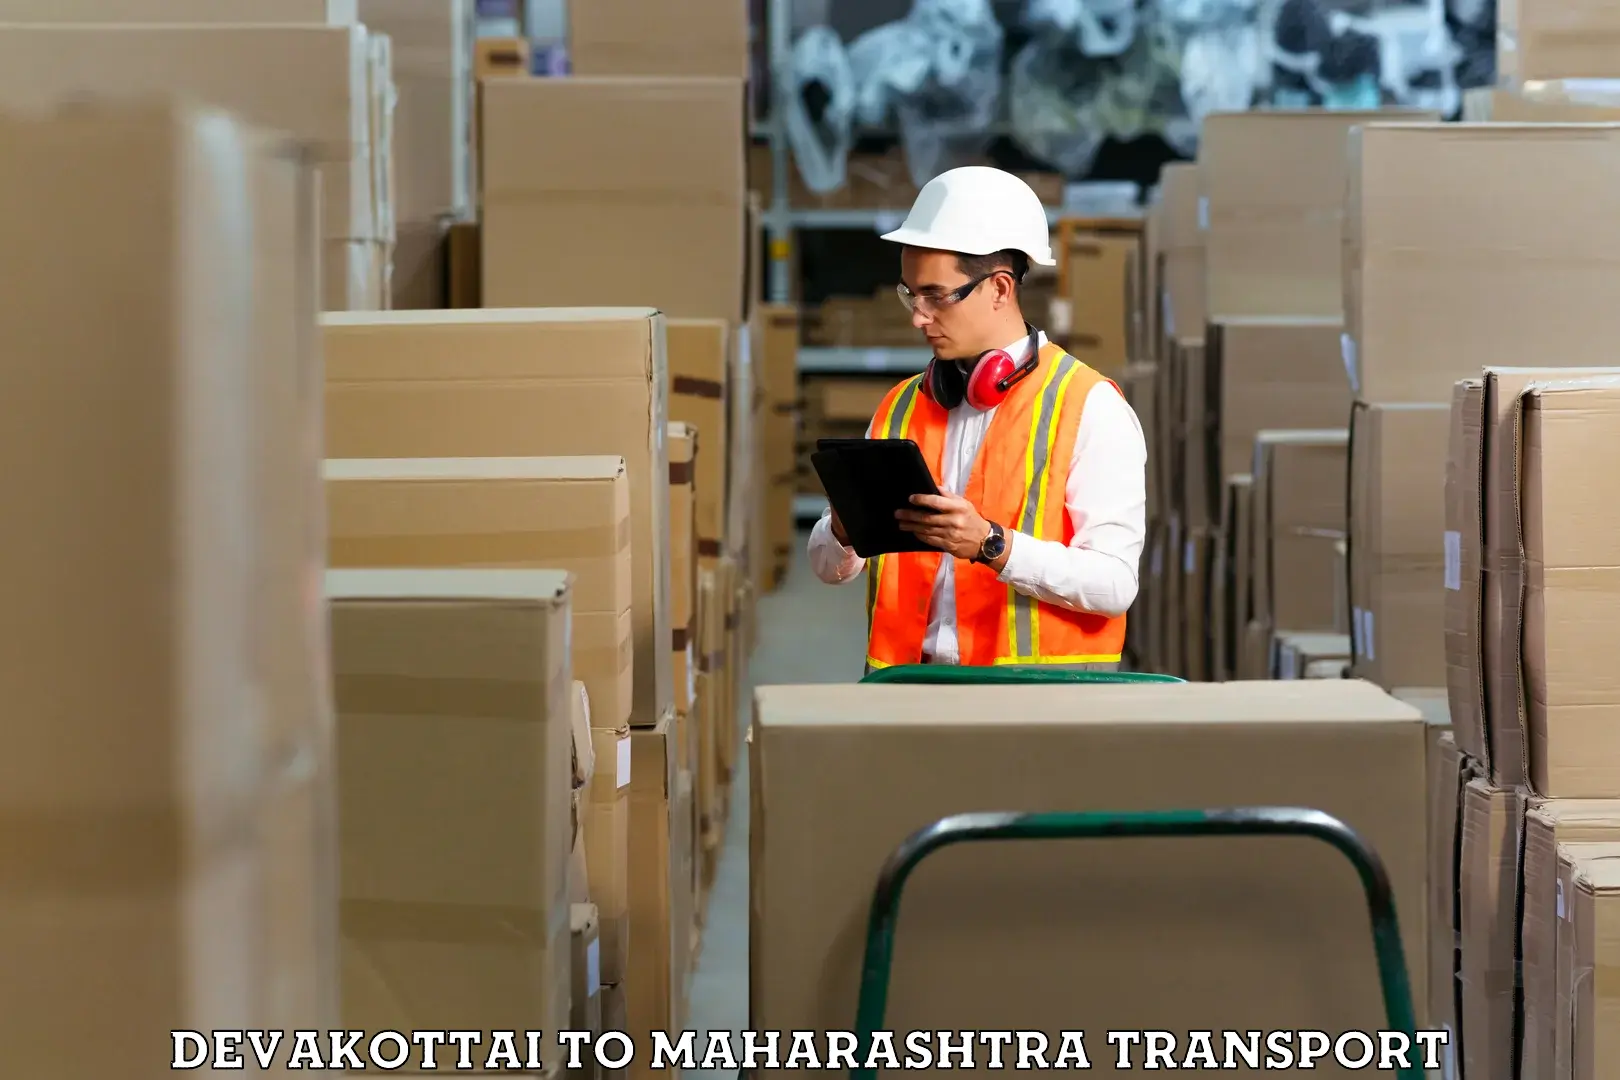 Furniture transport service Devakottai to Pune